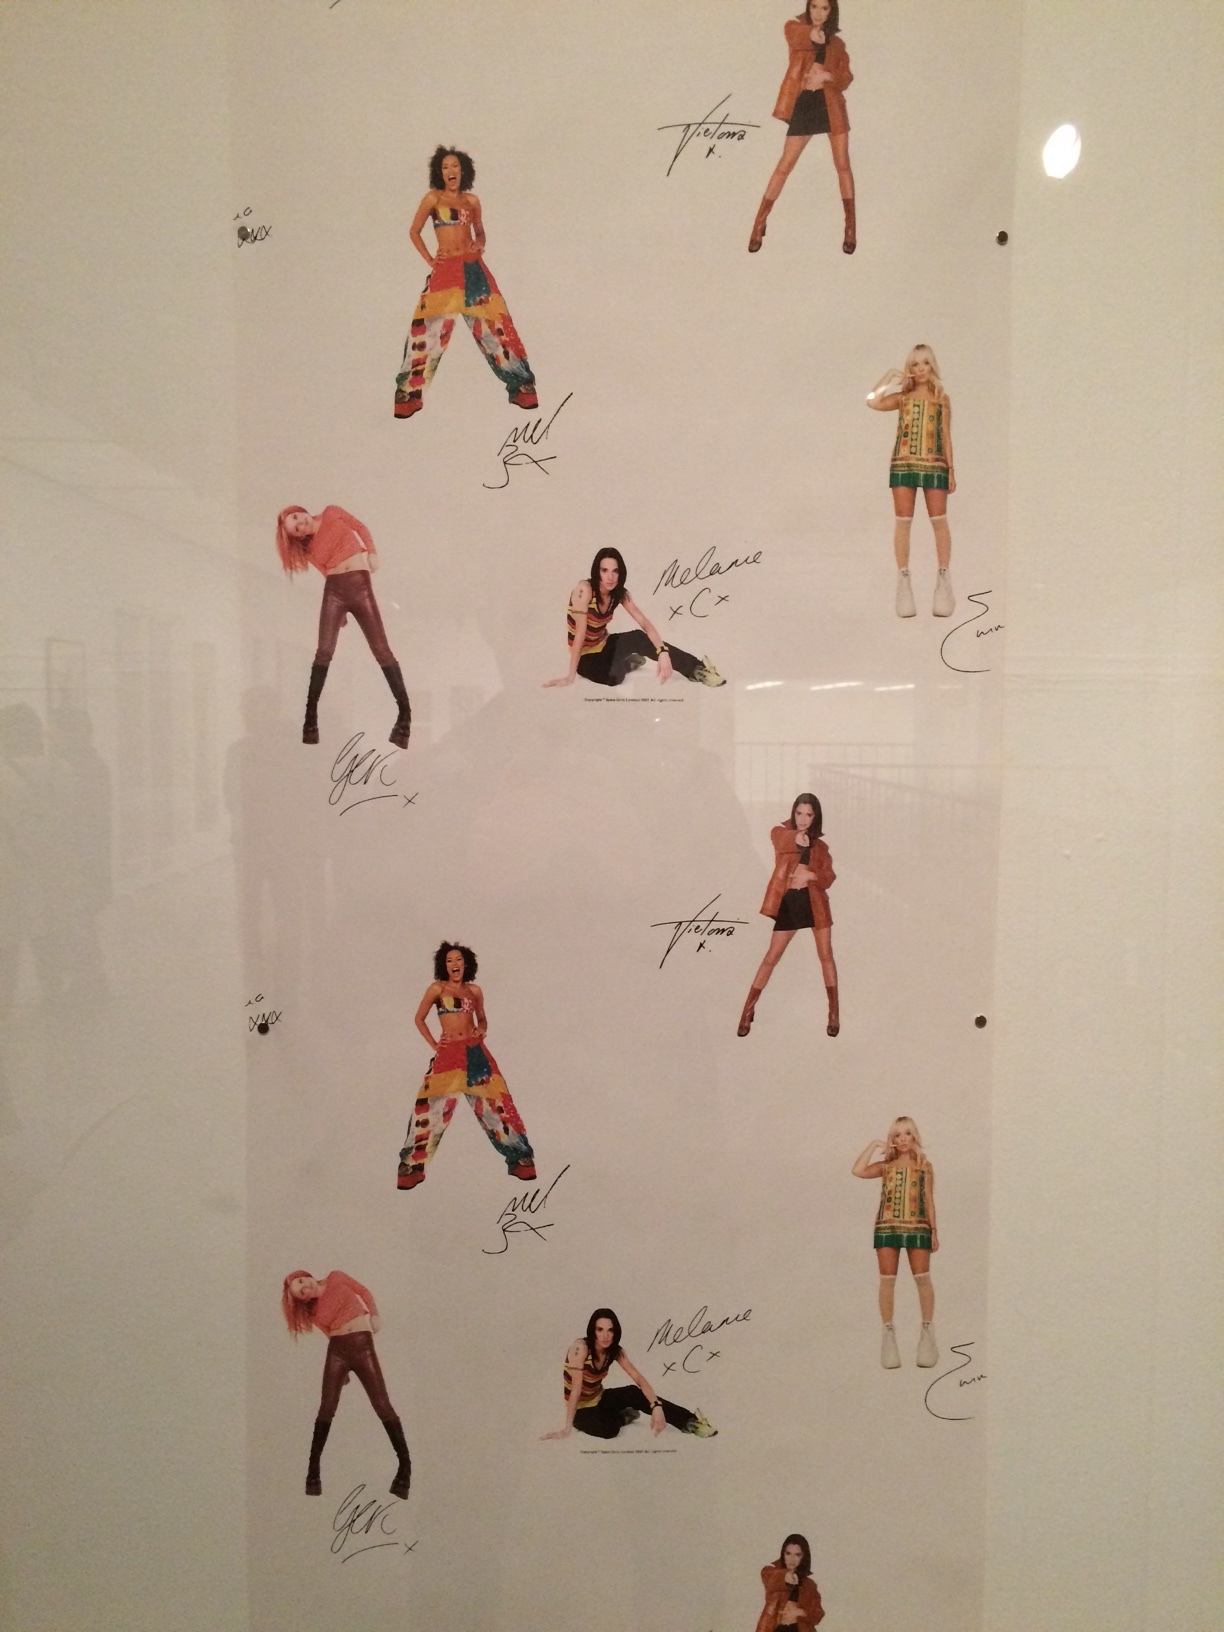 Spice Girls Wallpaper, Whitworth Art Gallery , HD Wallpaper & Backgrounds